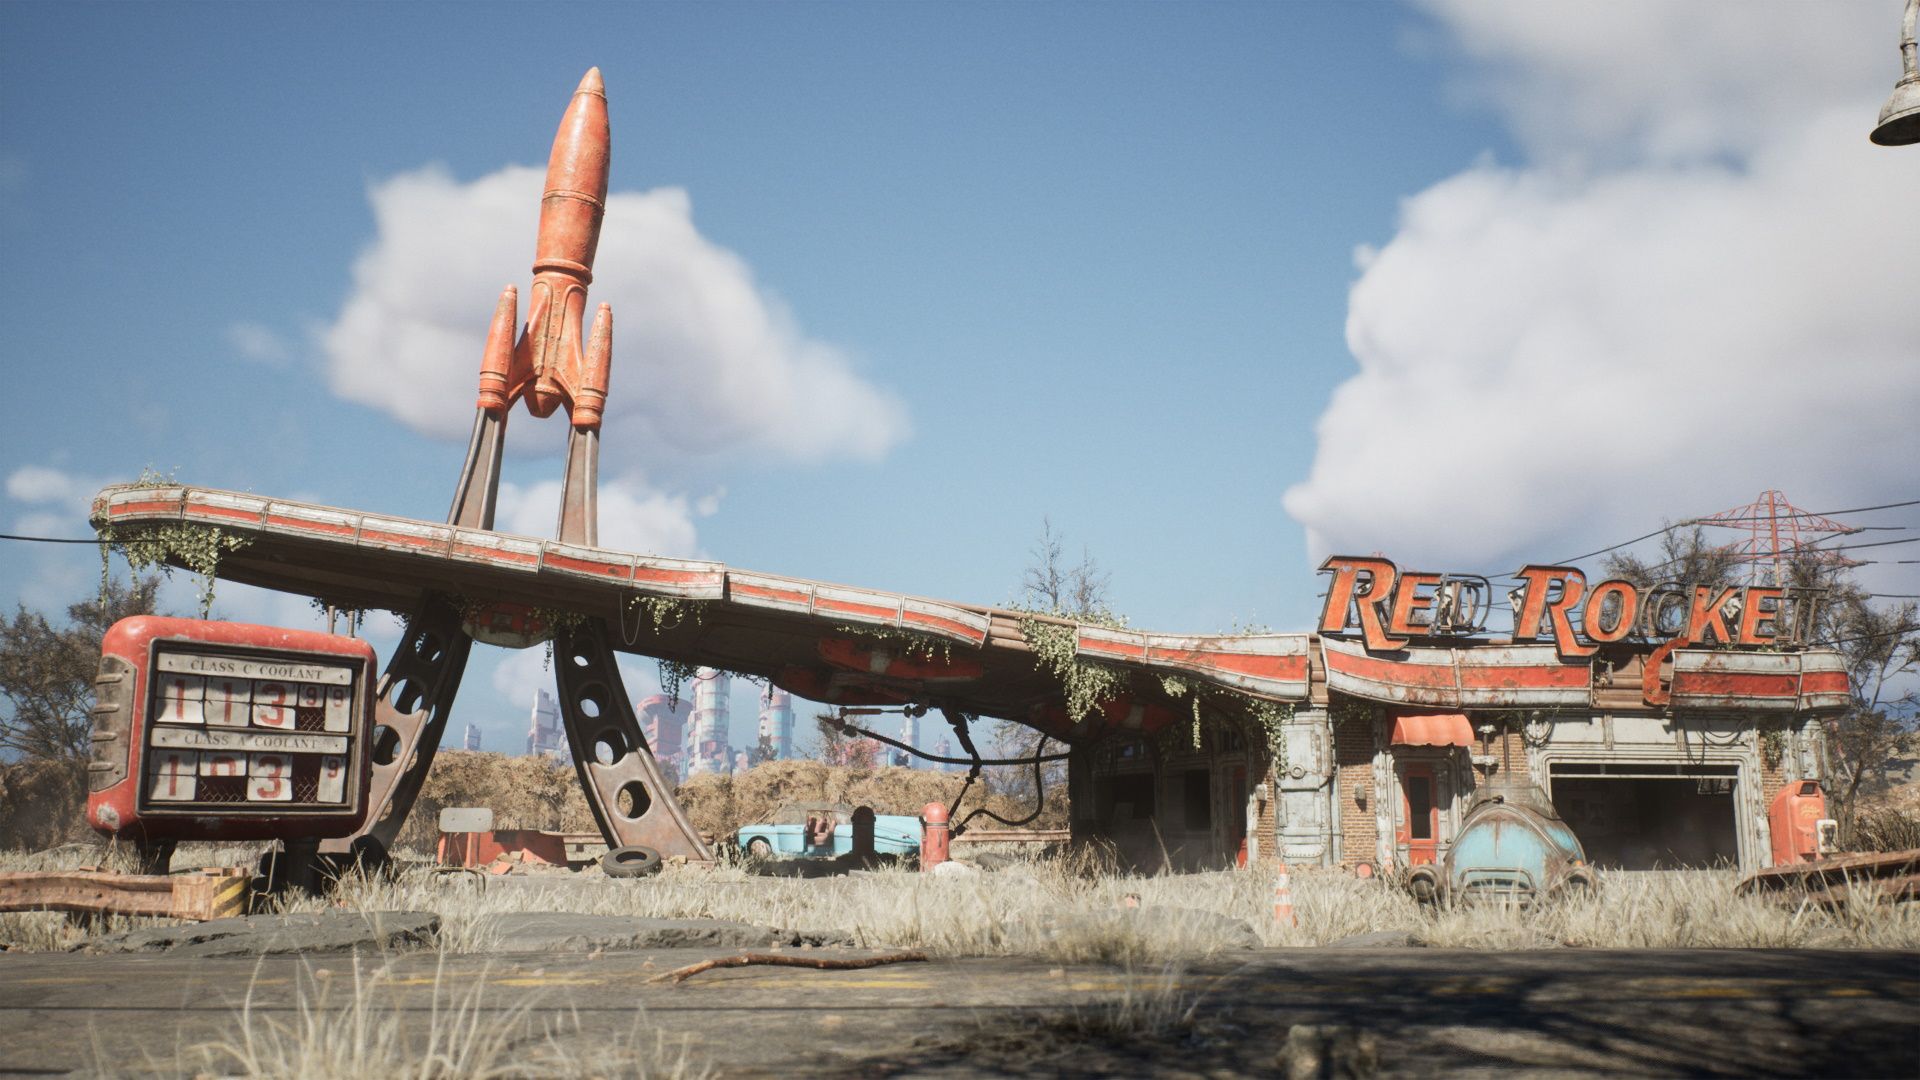 Red Rocket из Fallout 4 на Unreal Engine 5. Источник: artstation.com